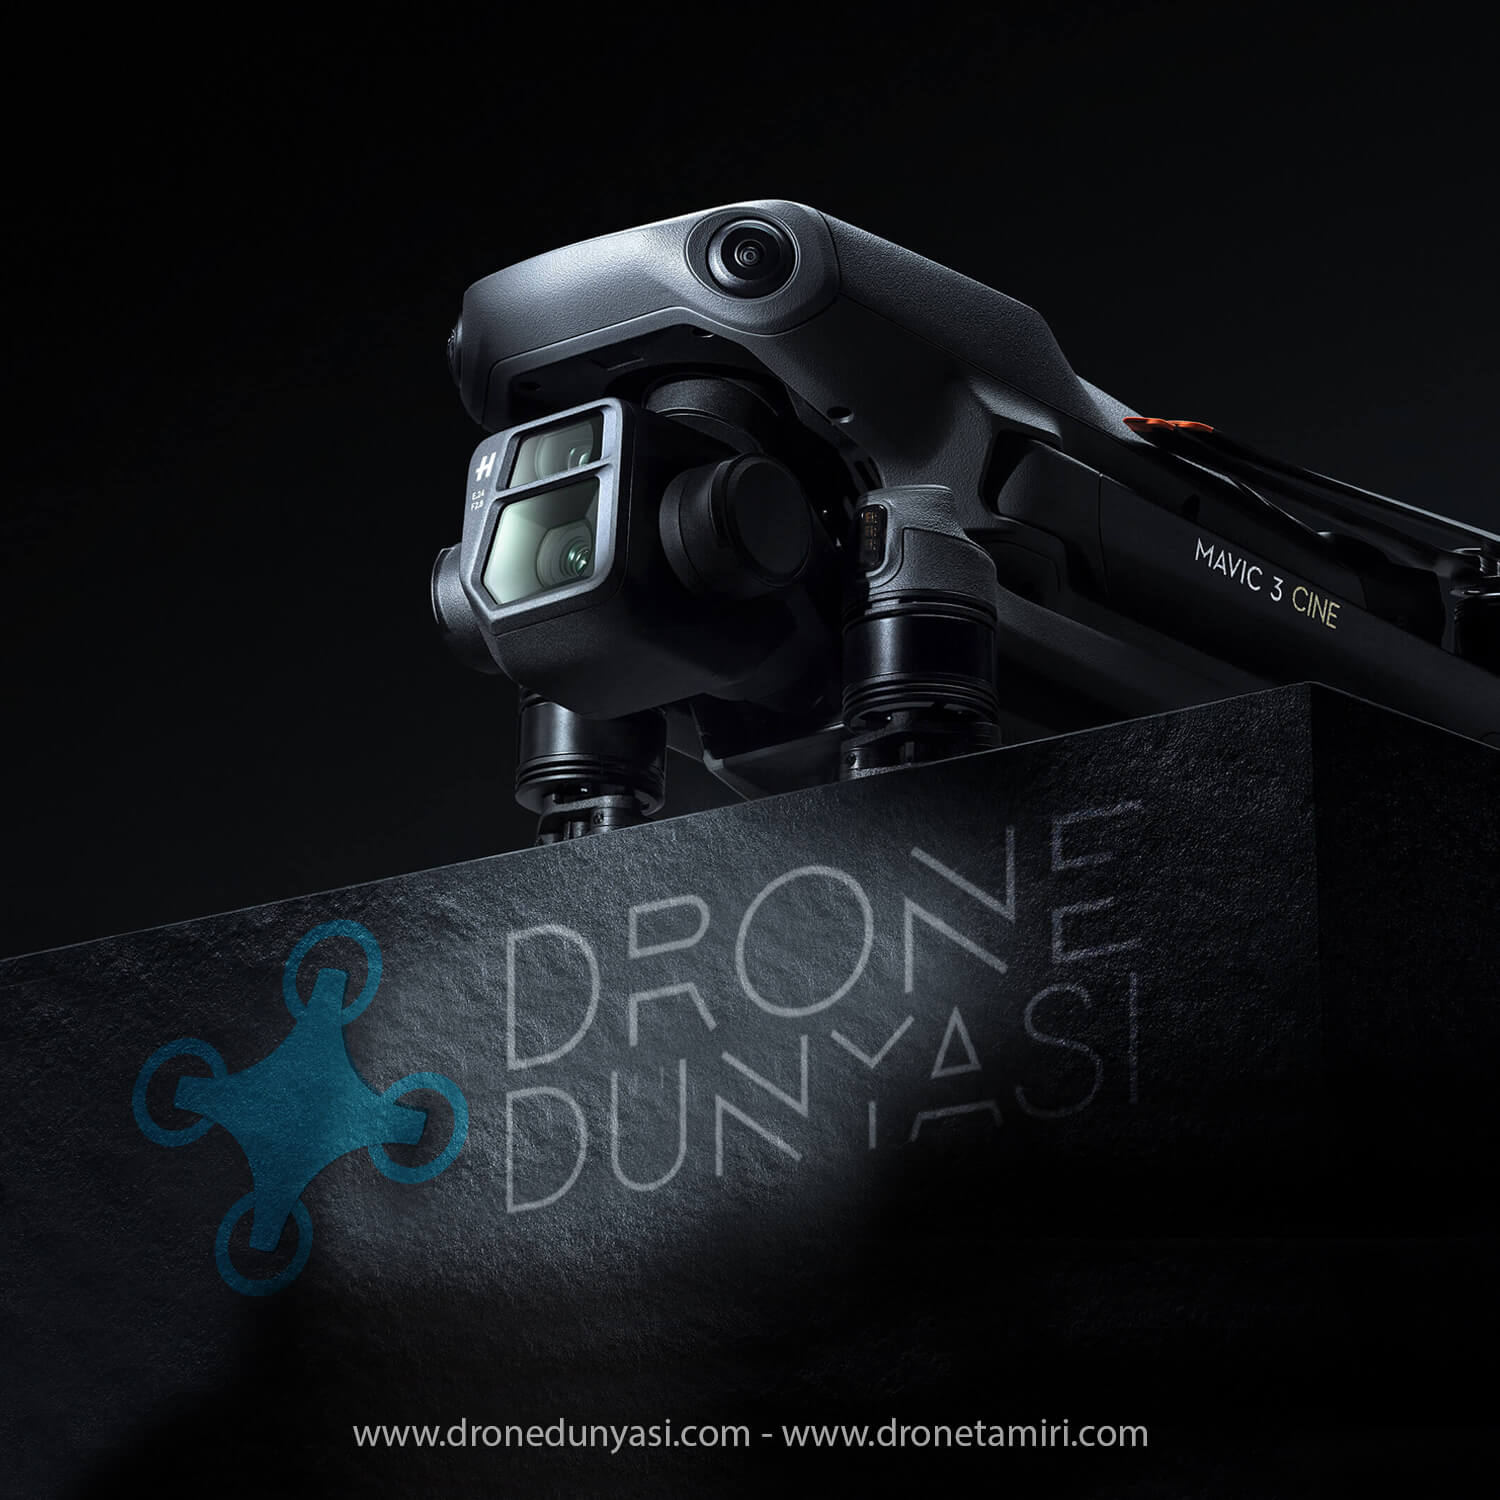 https://www.dronetamiri.com/wp-content/uploads/2022/02/drone-dunyasi-com.jpg